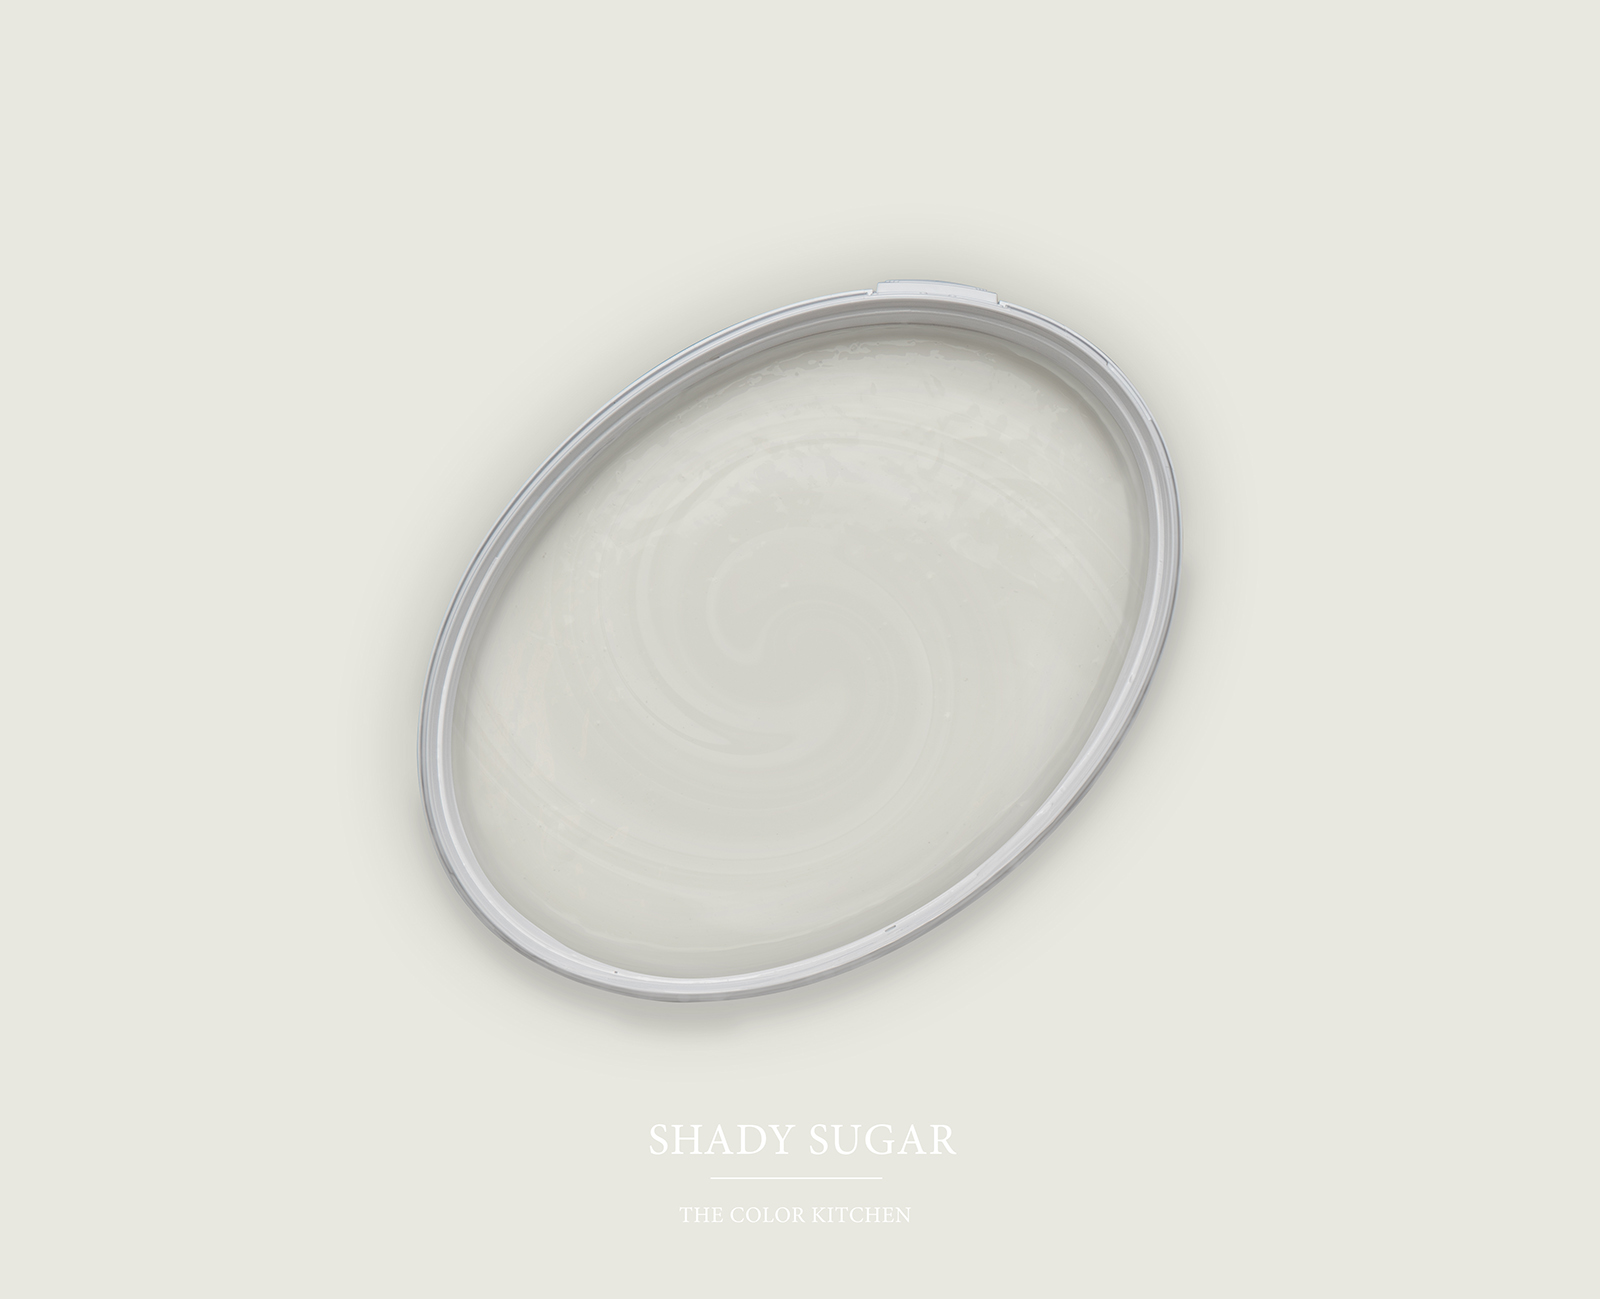         Wall Paint TCK1008 »Shady Sugar« in warm white – 2.5 litre
    